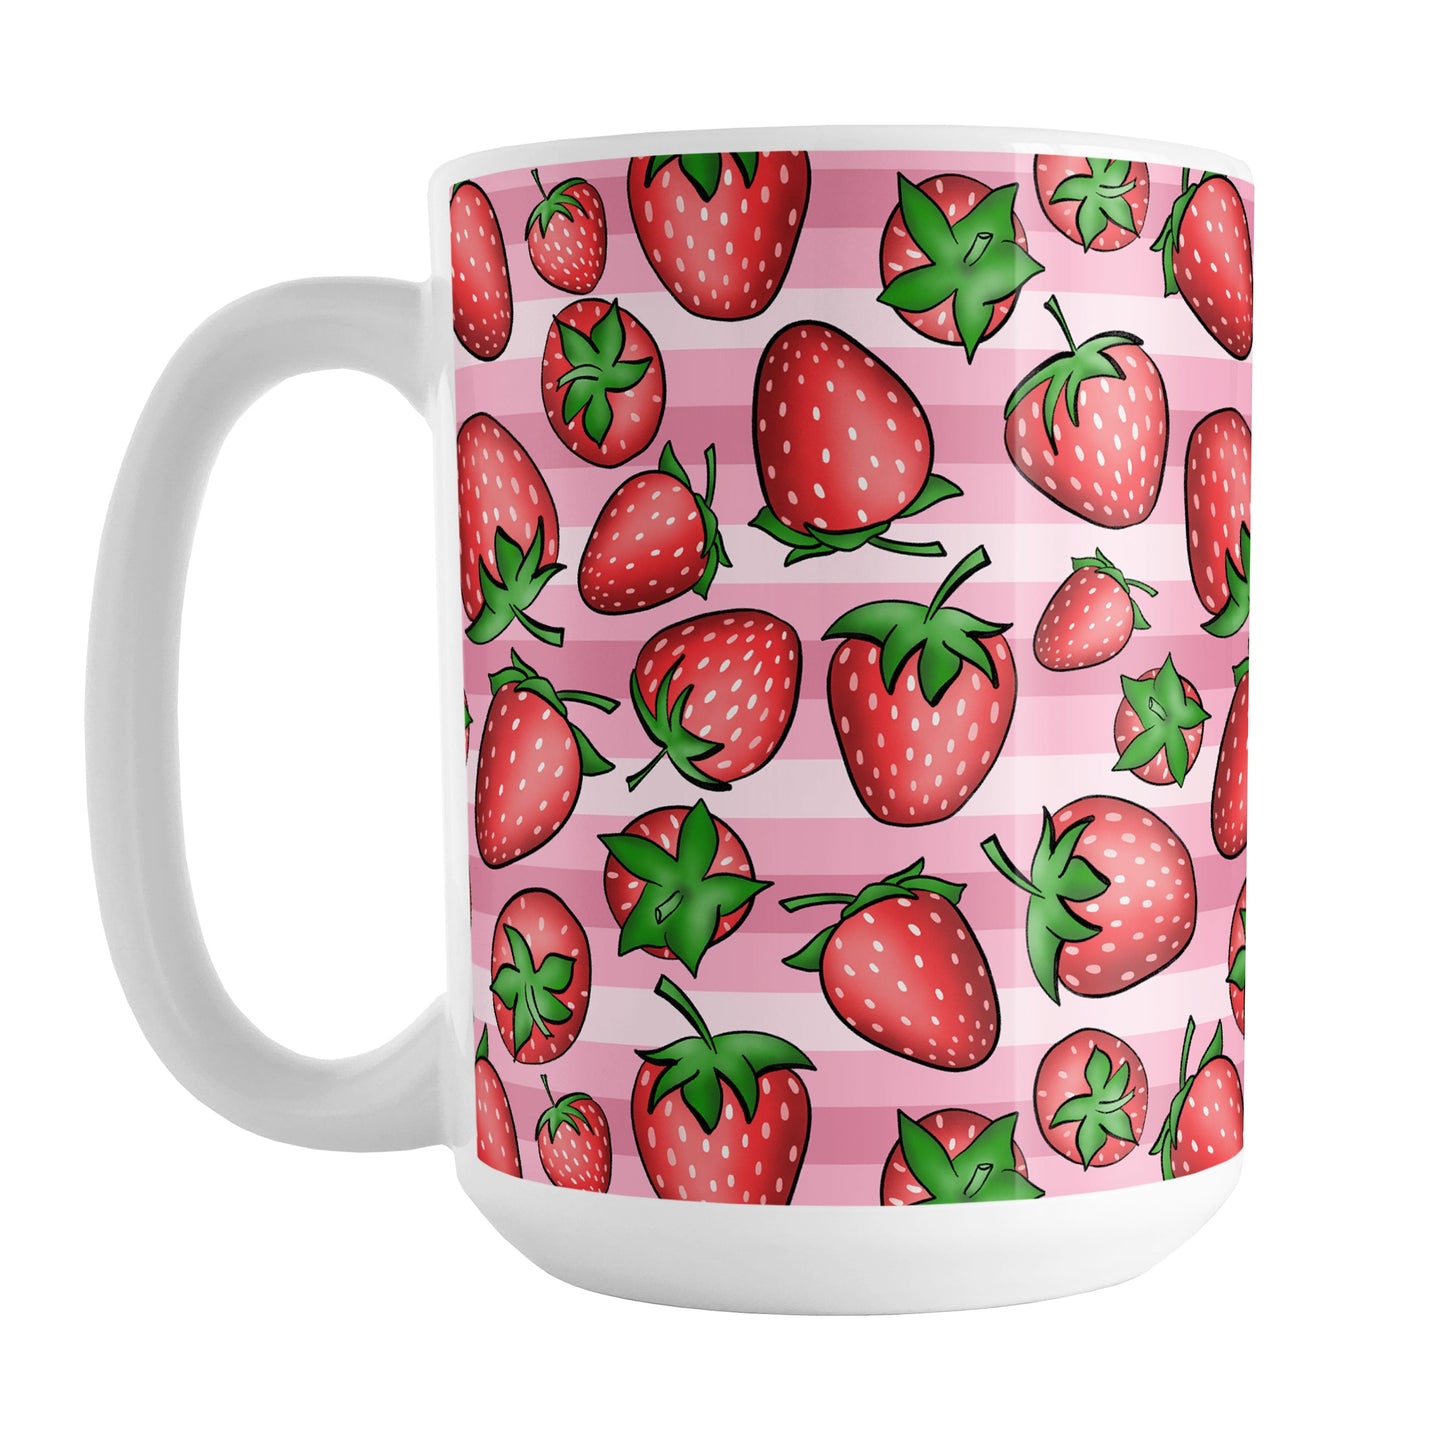 Strawberries on Pink Stripes Mug (15oz) at Amy's Coffee Mugs